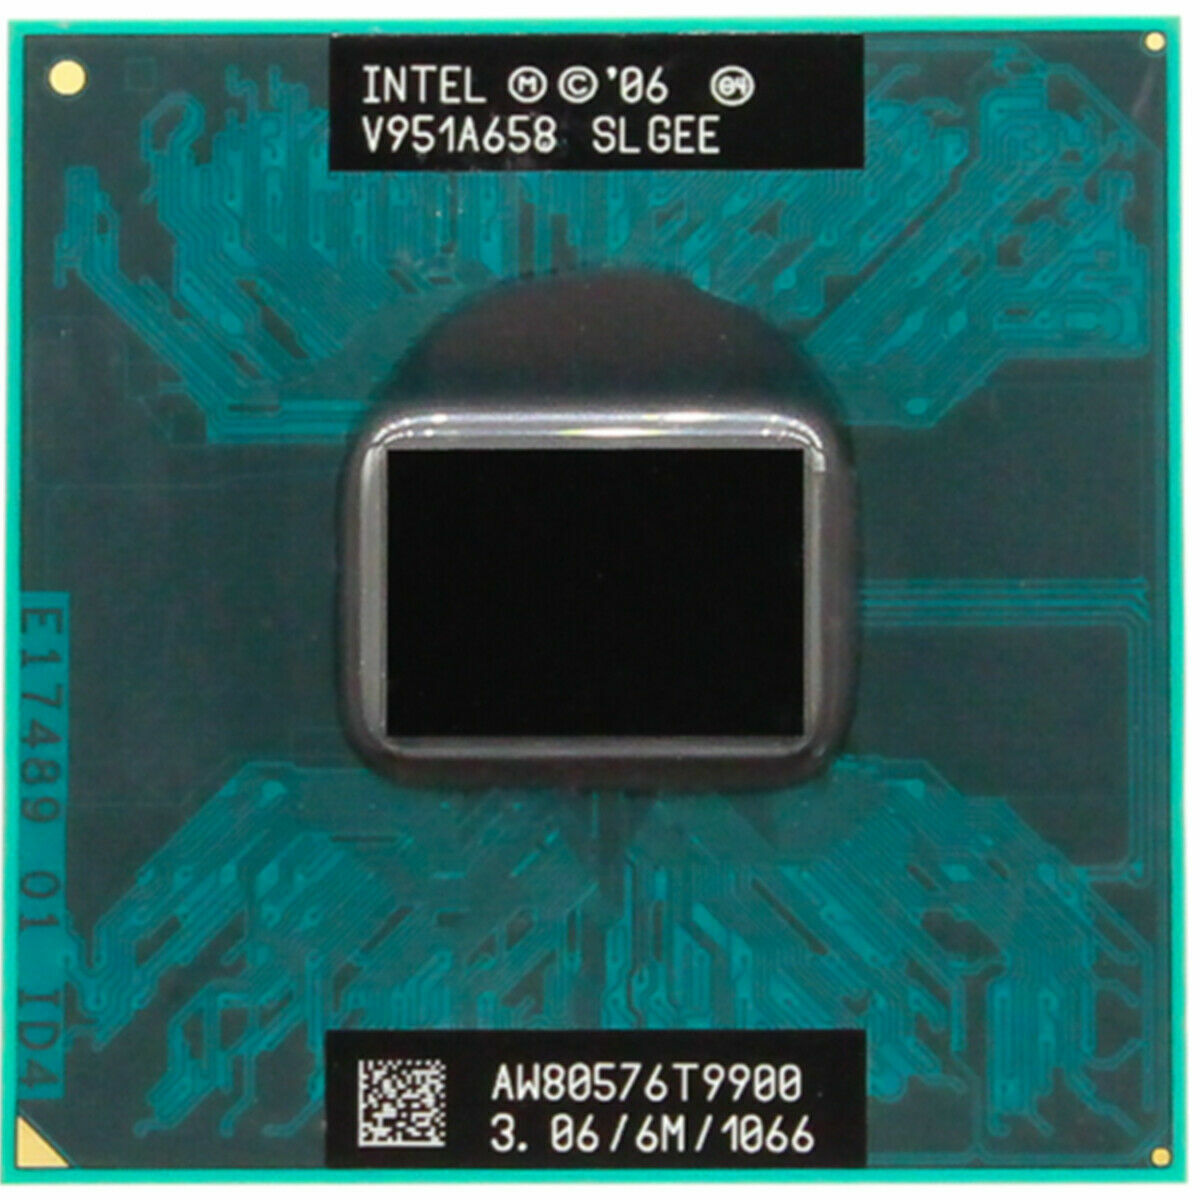 Tante Interactie Corrupt Intel Core 2 Duo T9900 3.06GHz Dual-Core (AW80576GH0836MG) Processor for  sale online | eBay